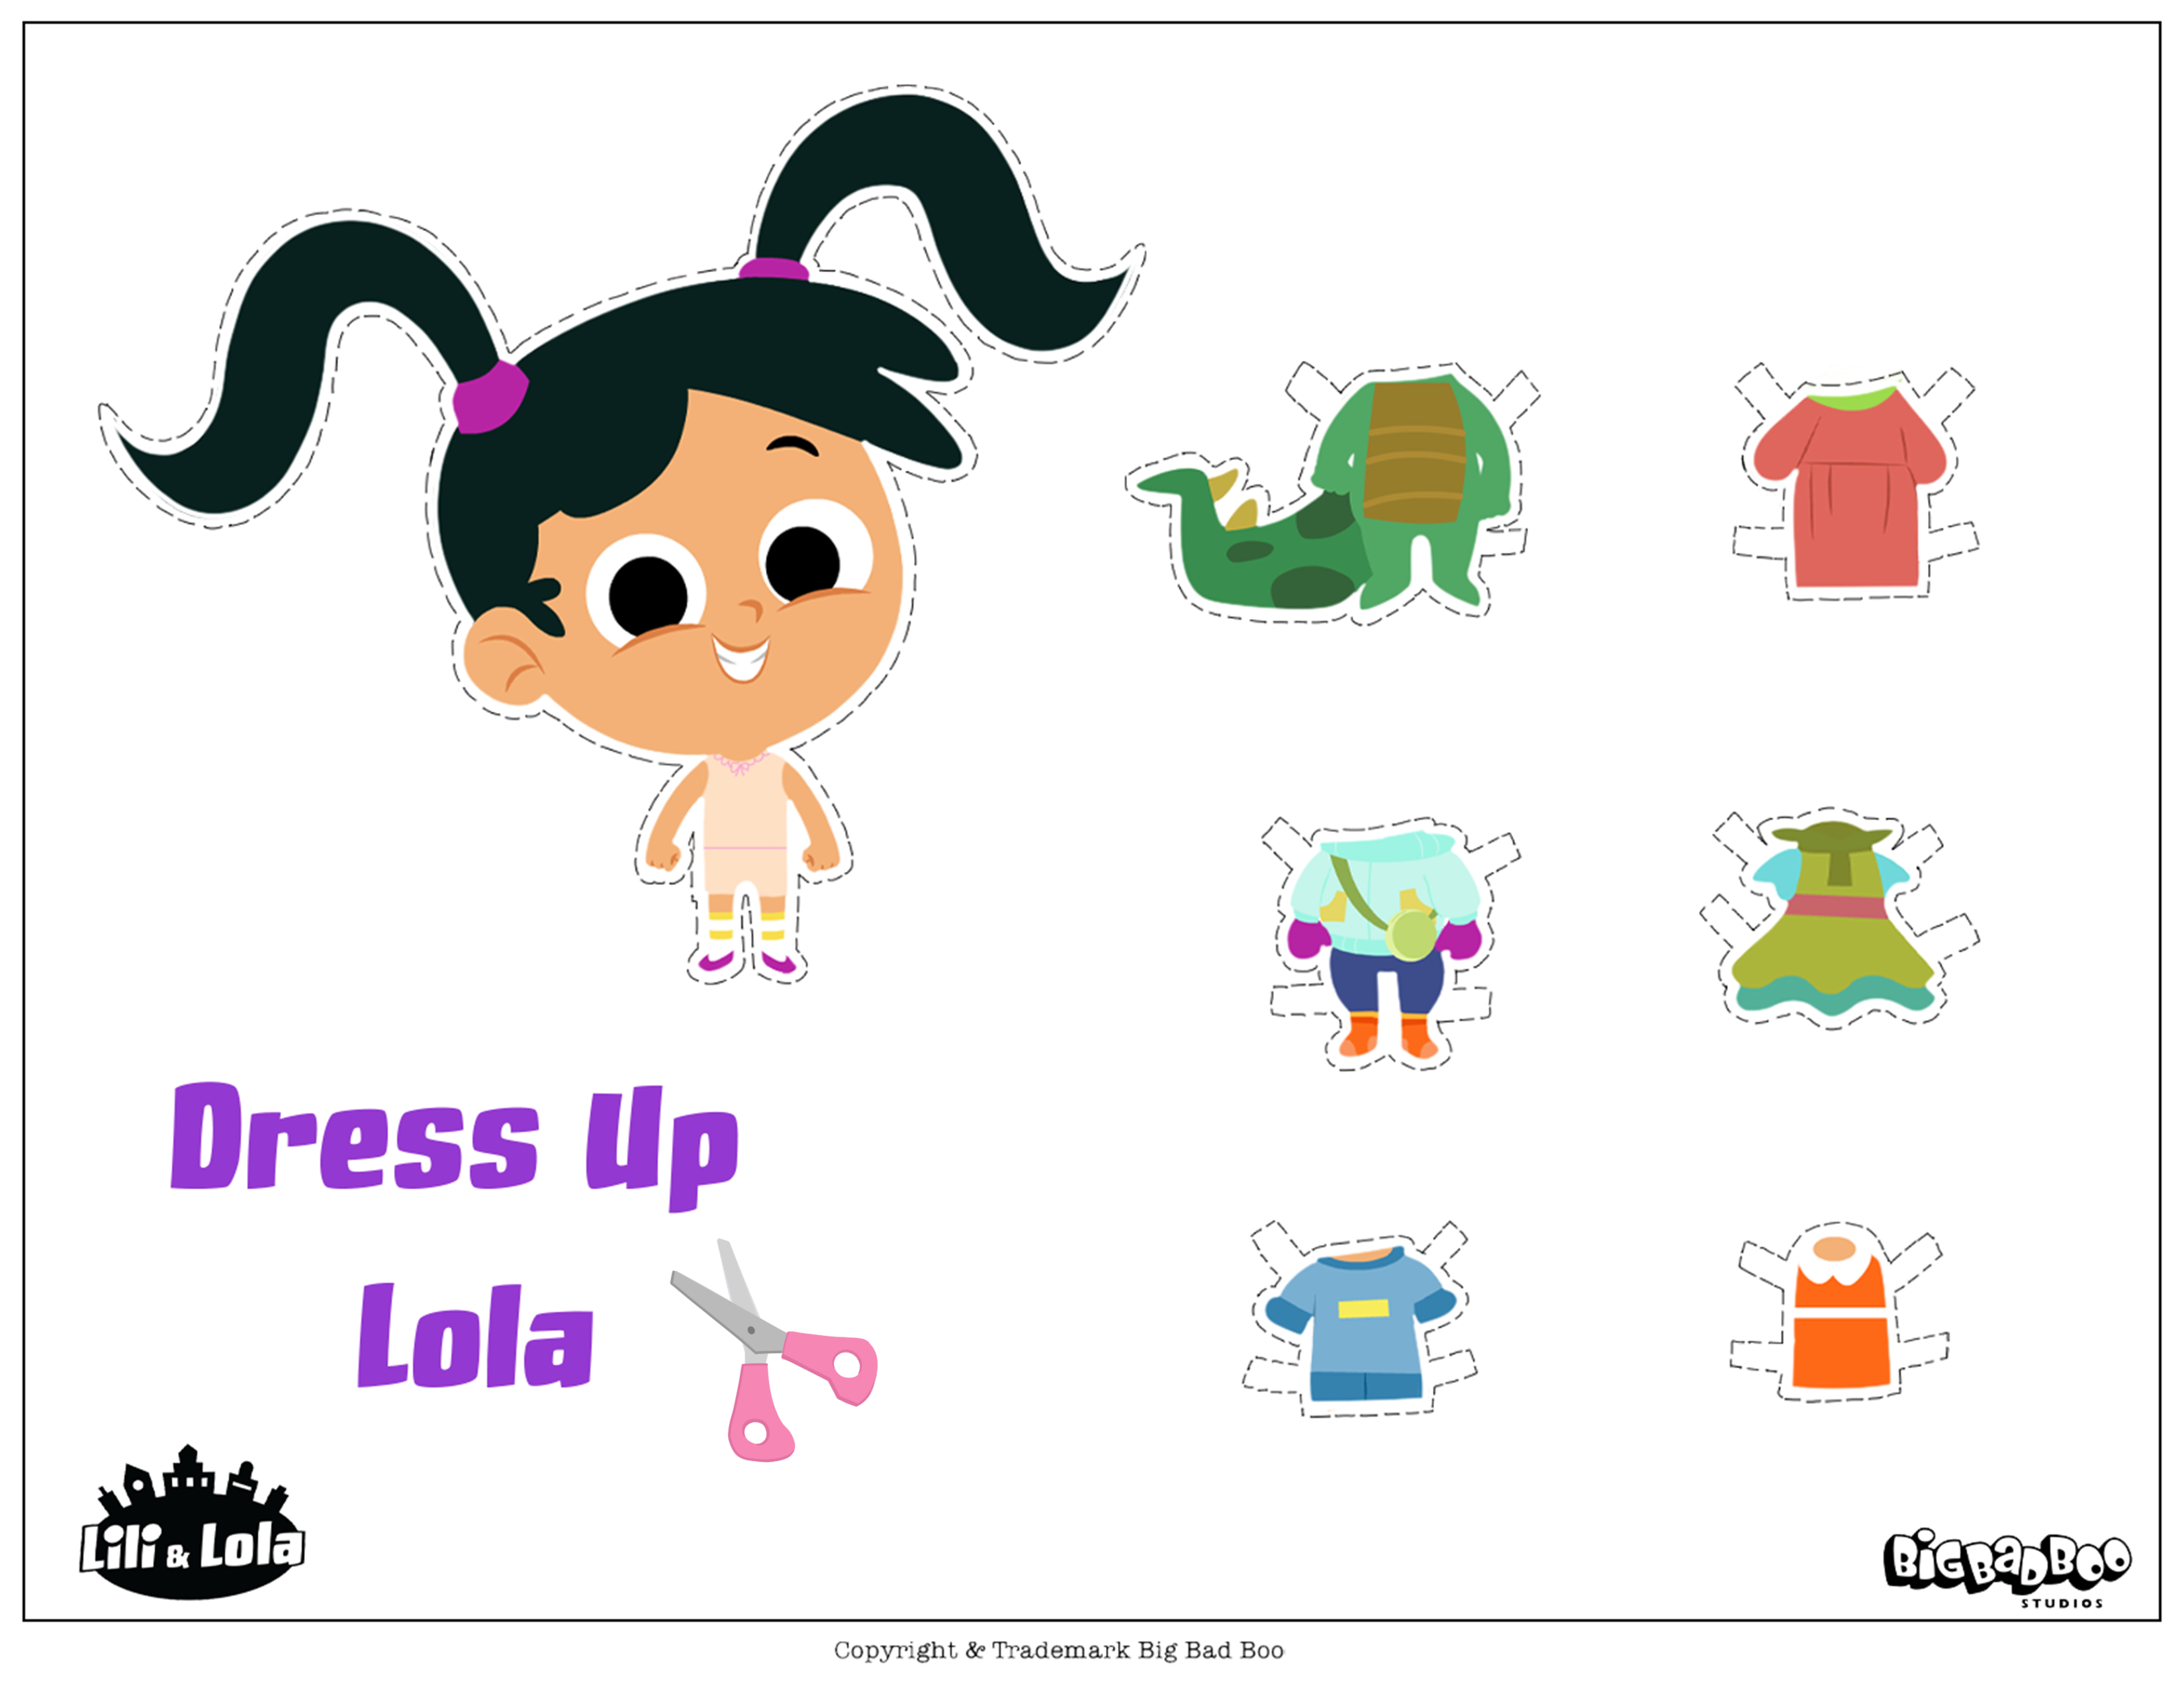 Dress up Lola